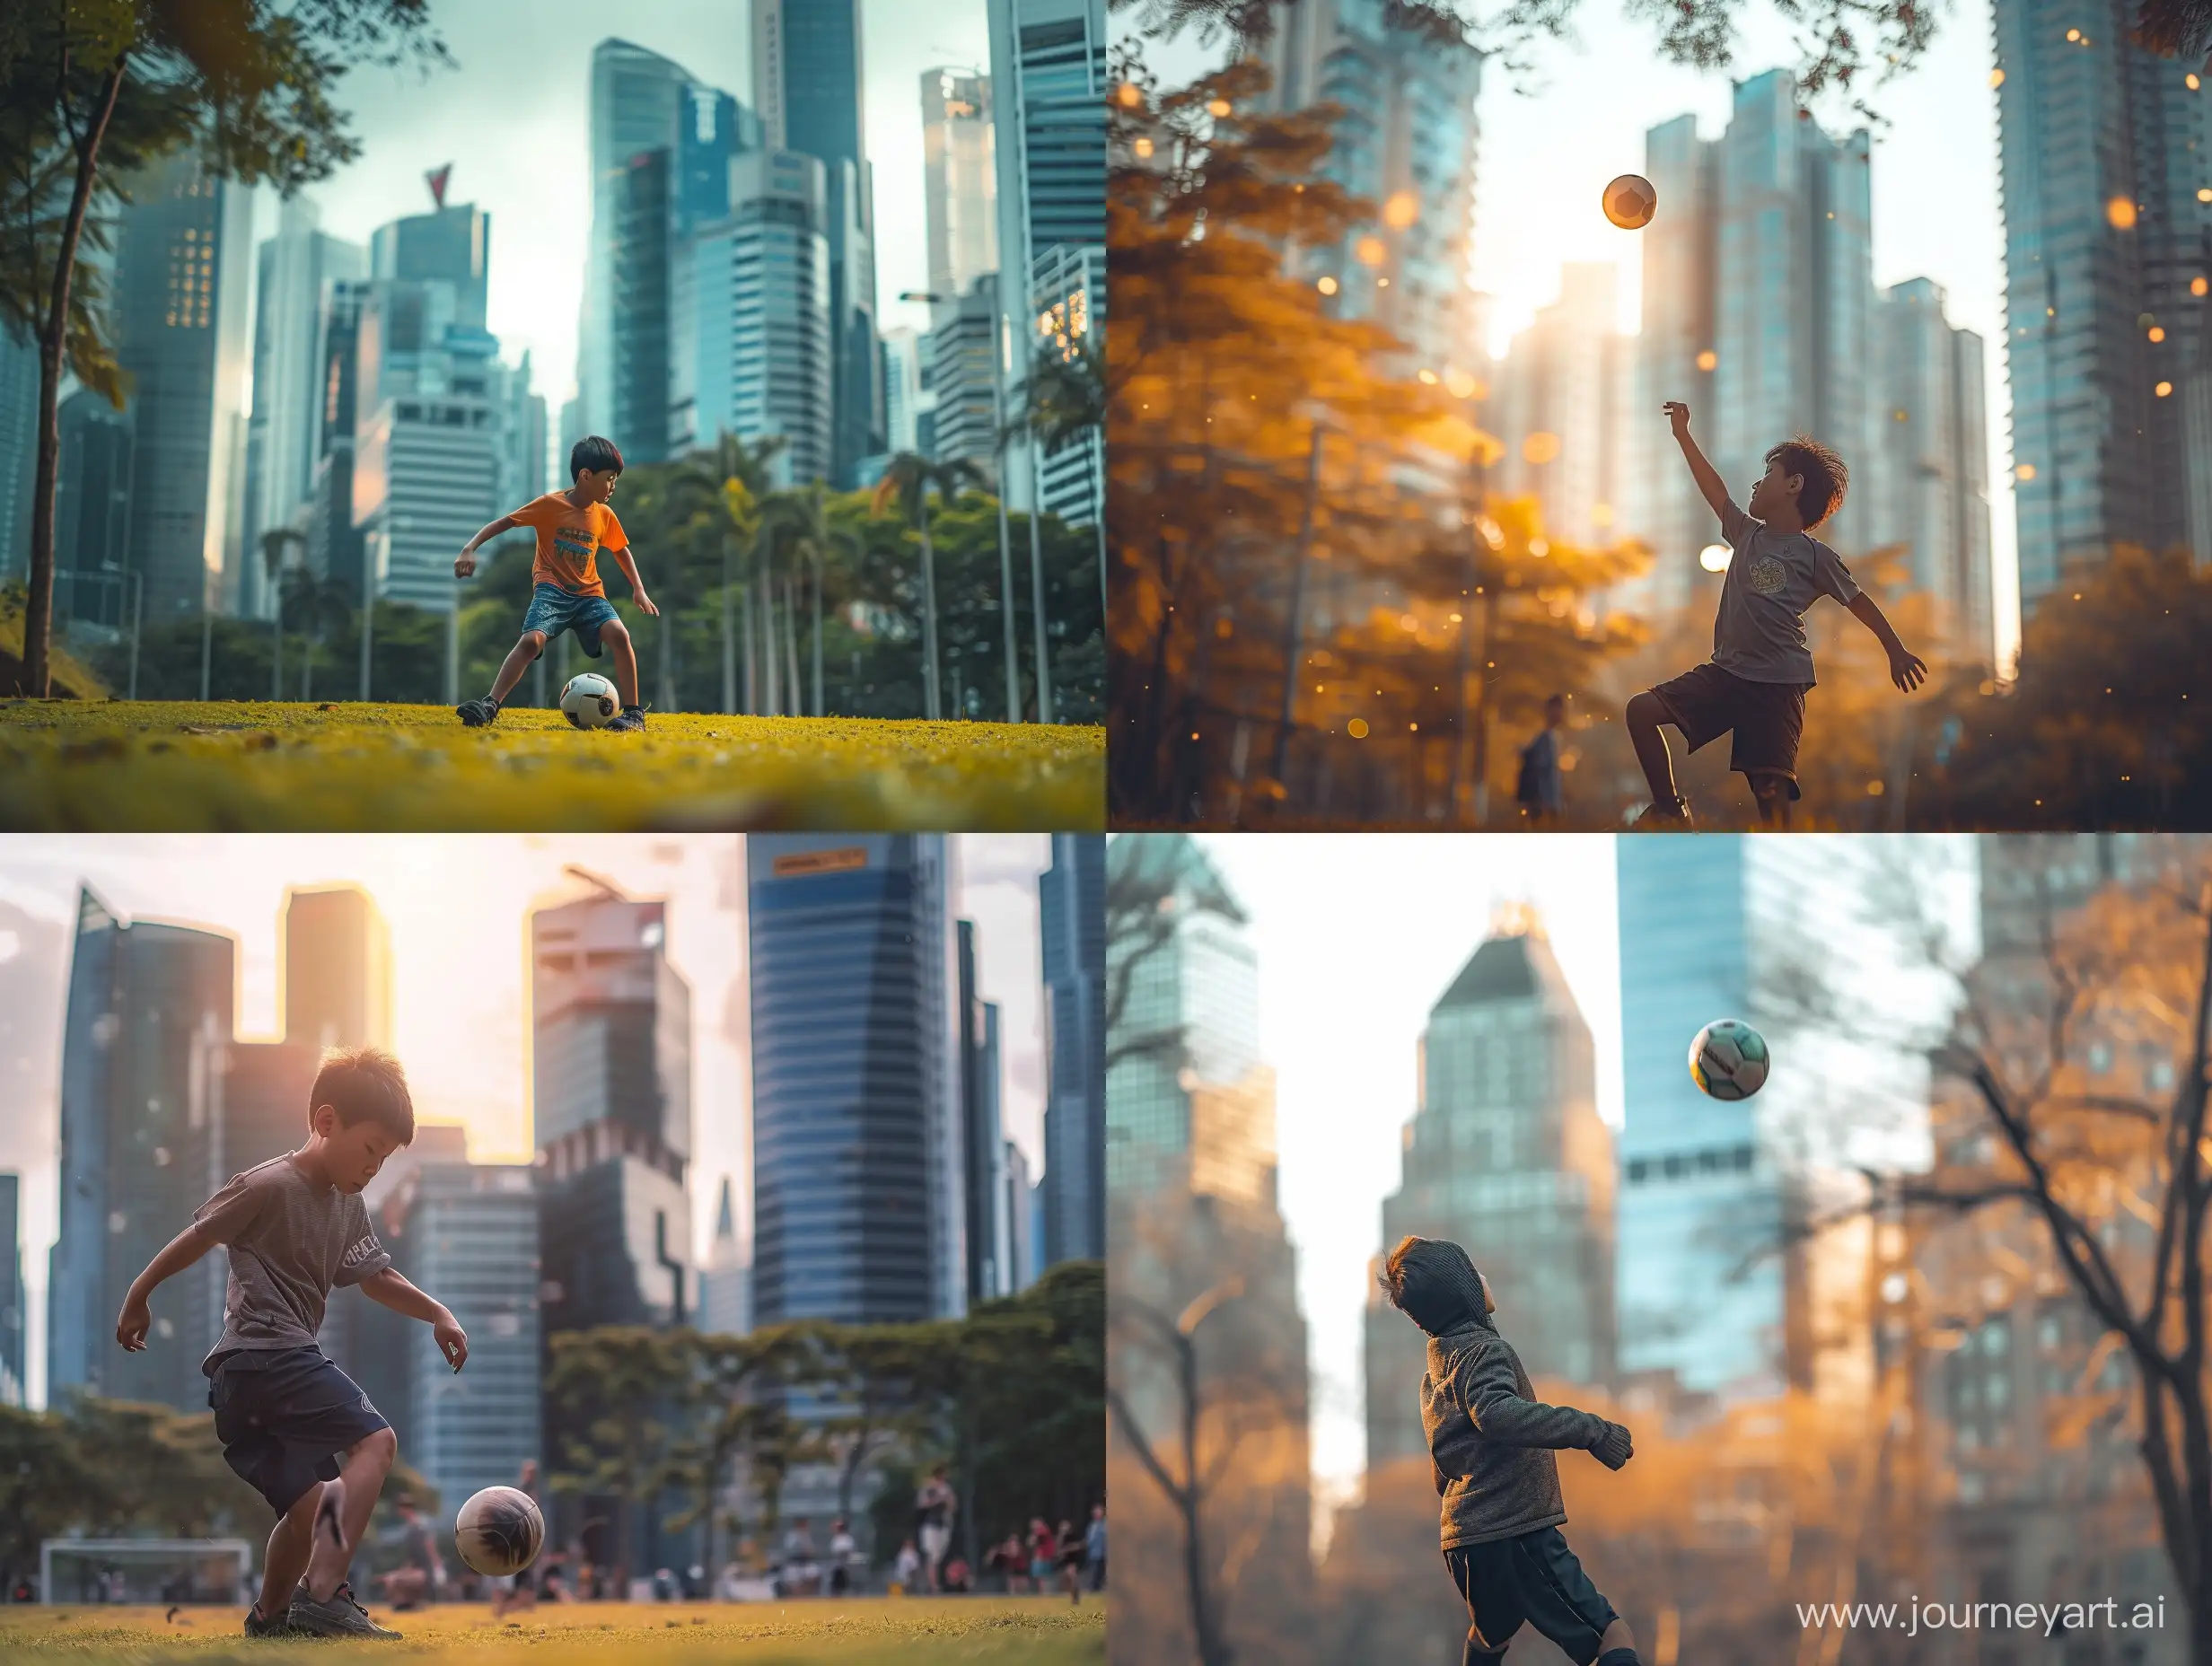 Urban-Park-Football-Fun-Energetic-Boy-in-Action-with-Skyscraper-Backdrop